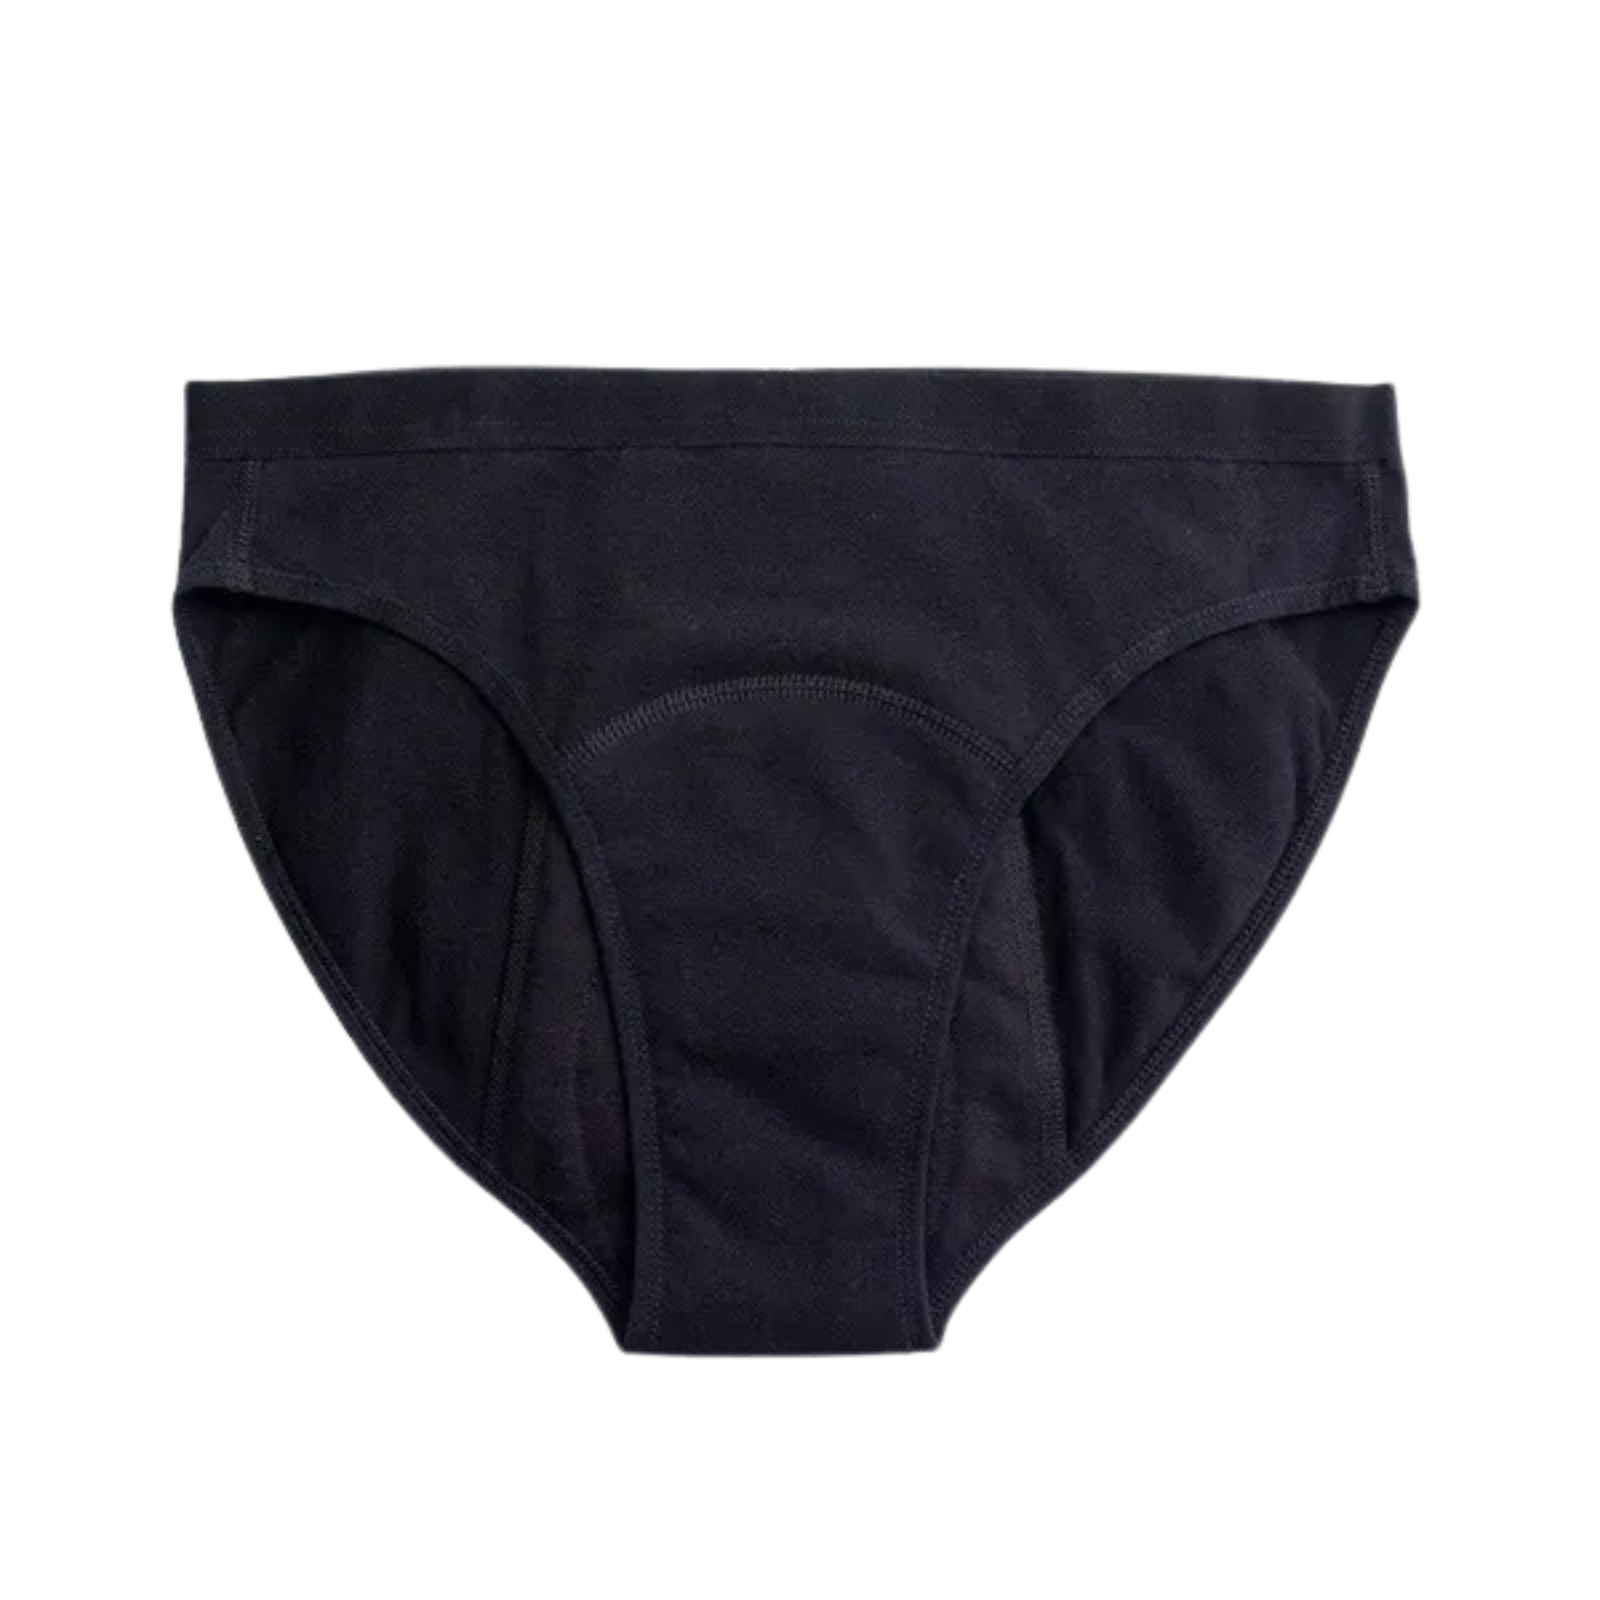 Reusable Period Underwear, Bikini, Medium, Black, 1 Count